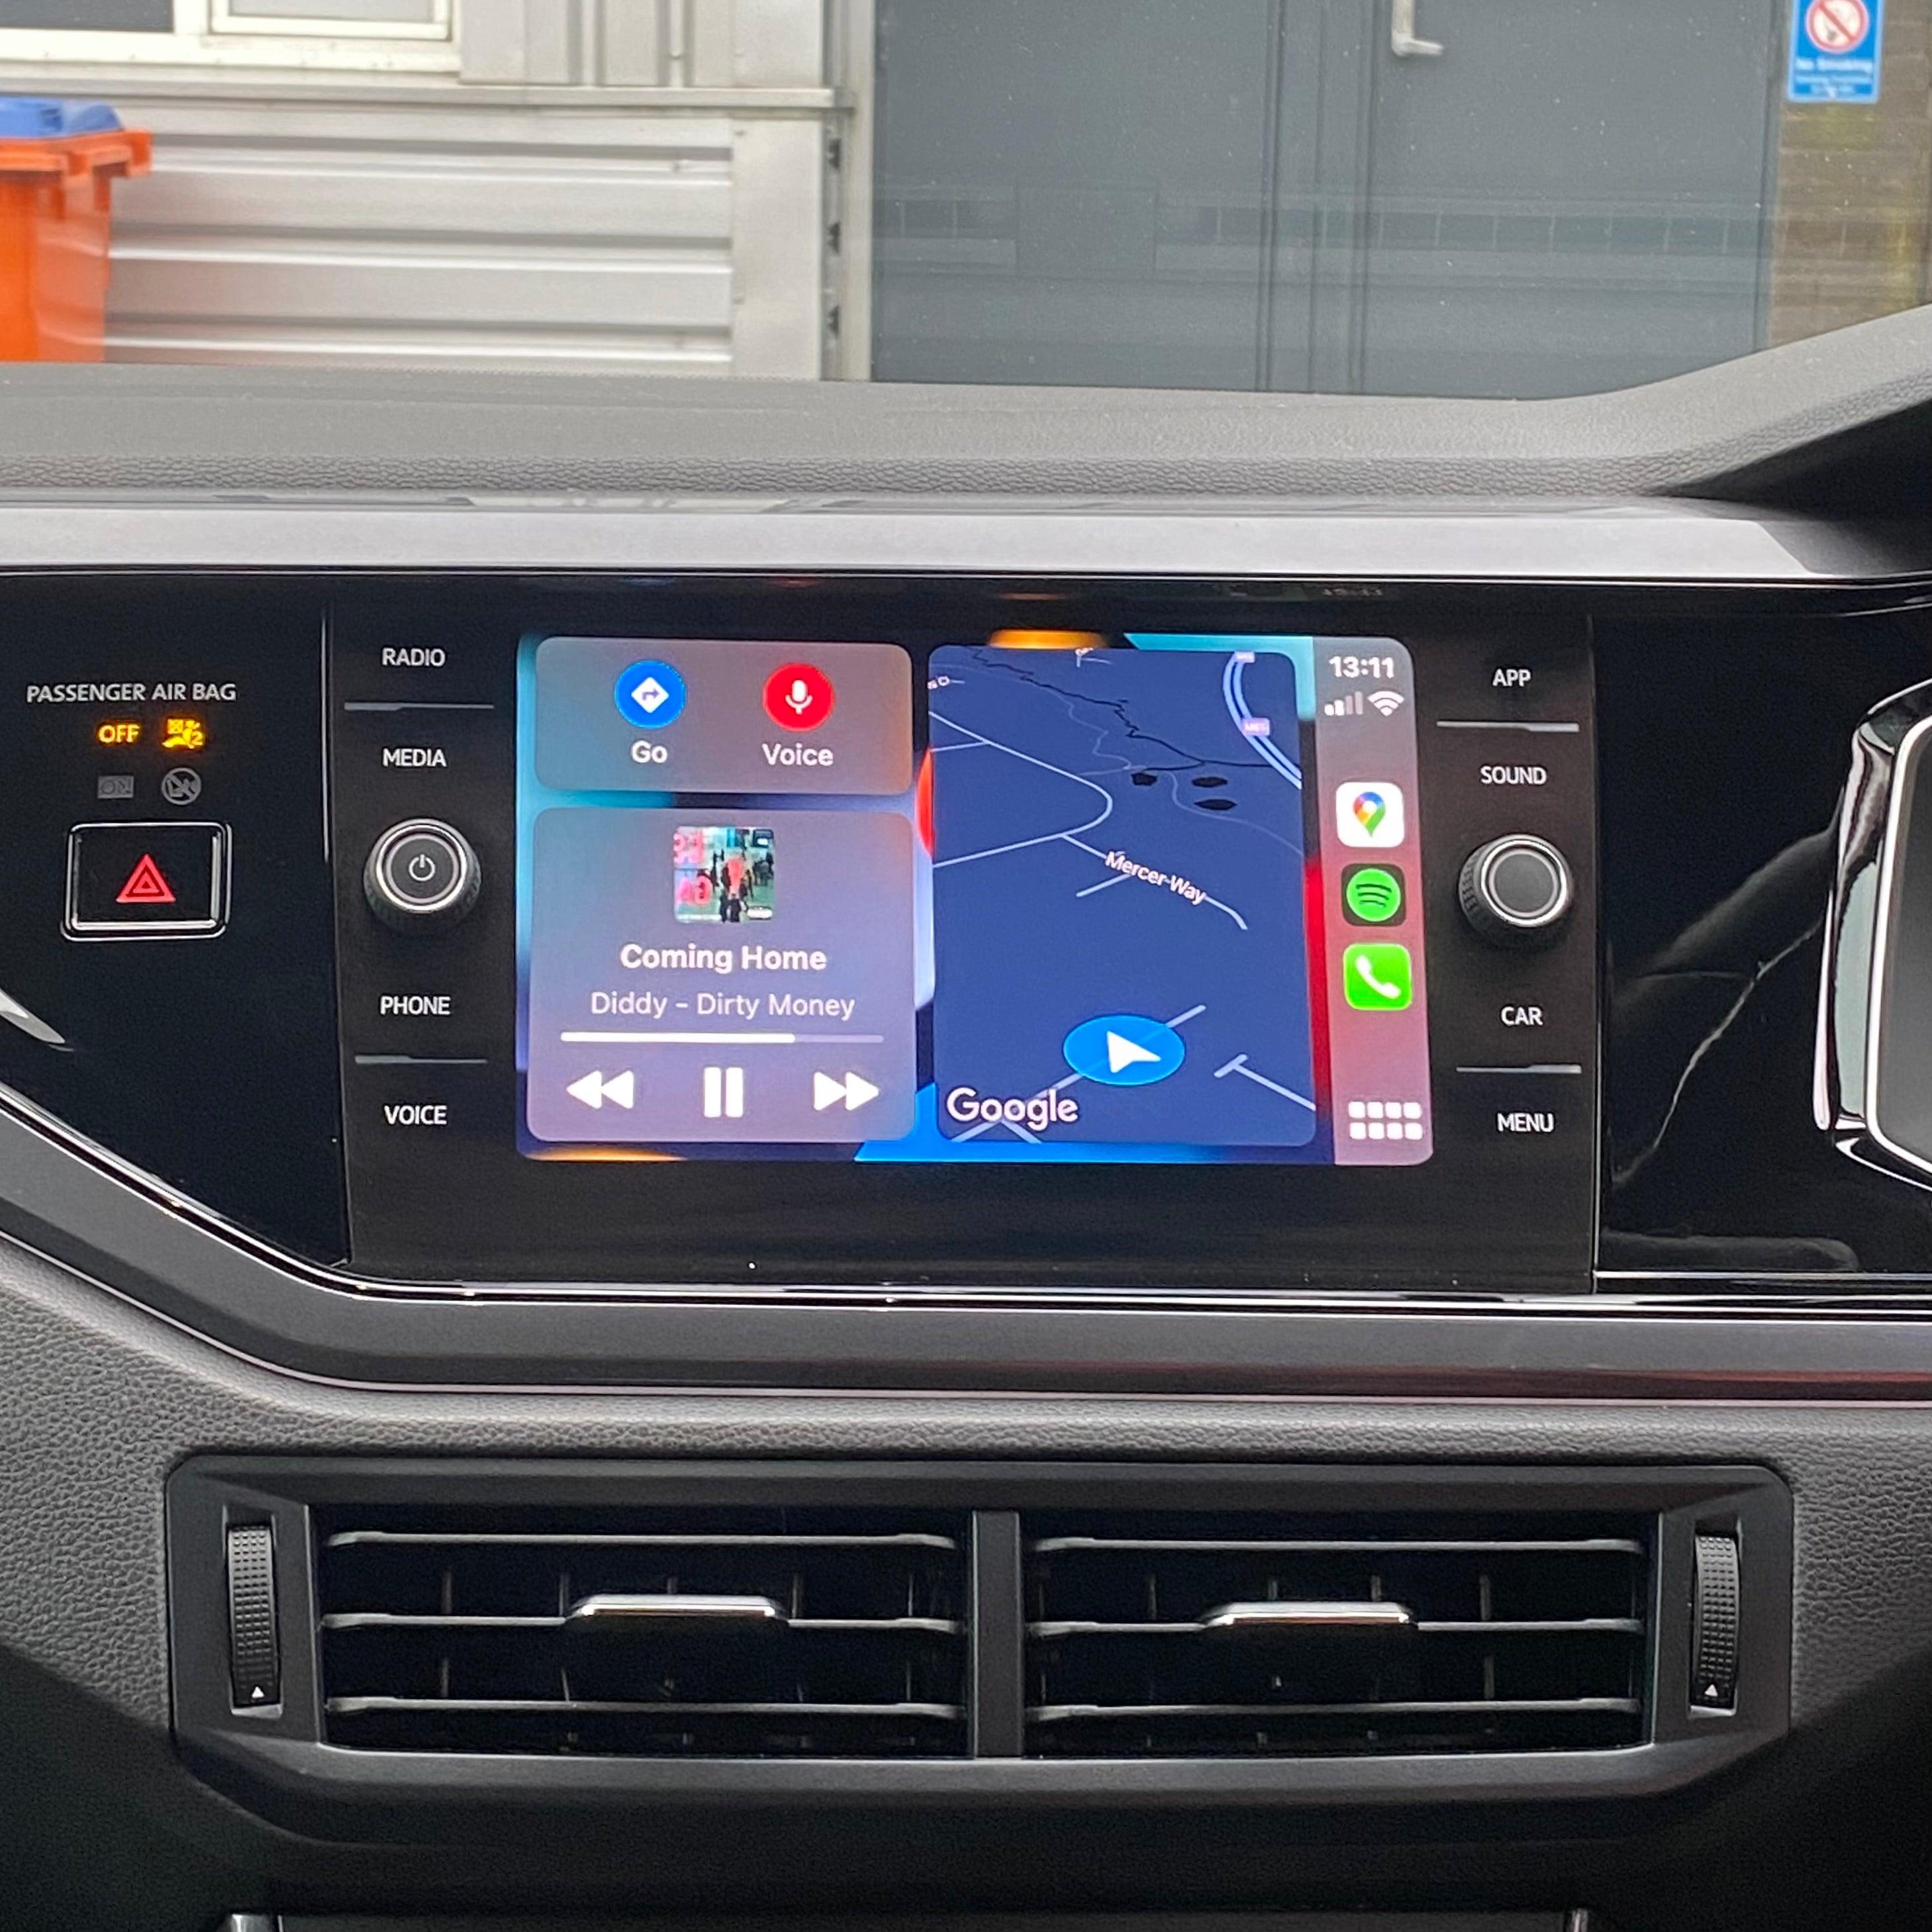 Wireless Apple CarPlay/Android Auto for Volkswagen Golf Passat Polo Touran Tiguan Crafter (2017-2019) - AUTOSTYLE UK